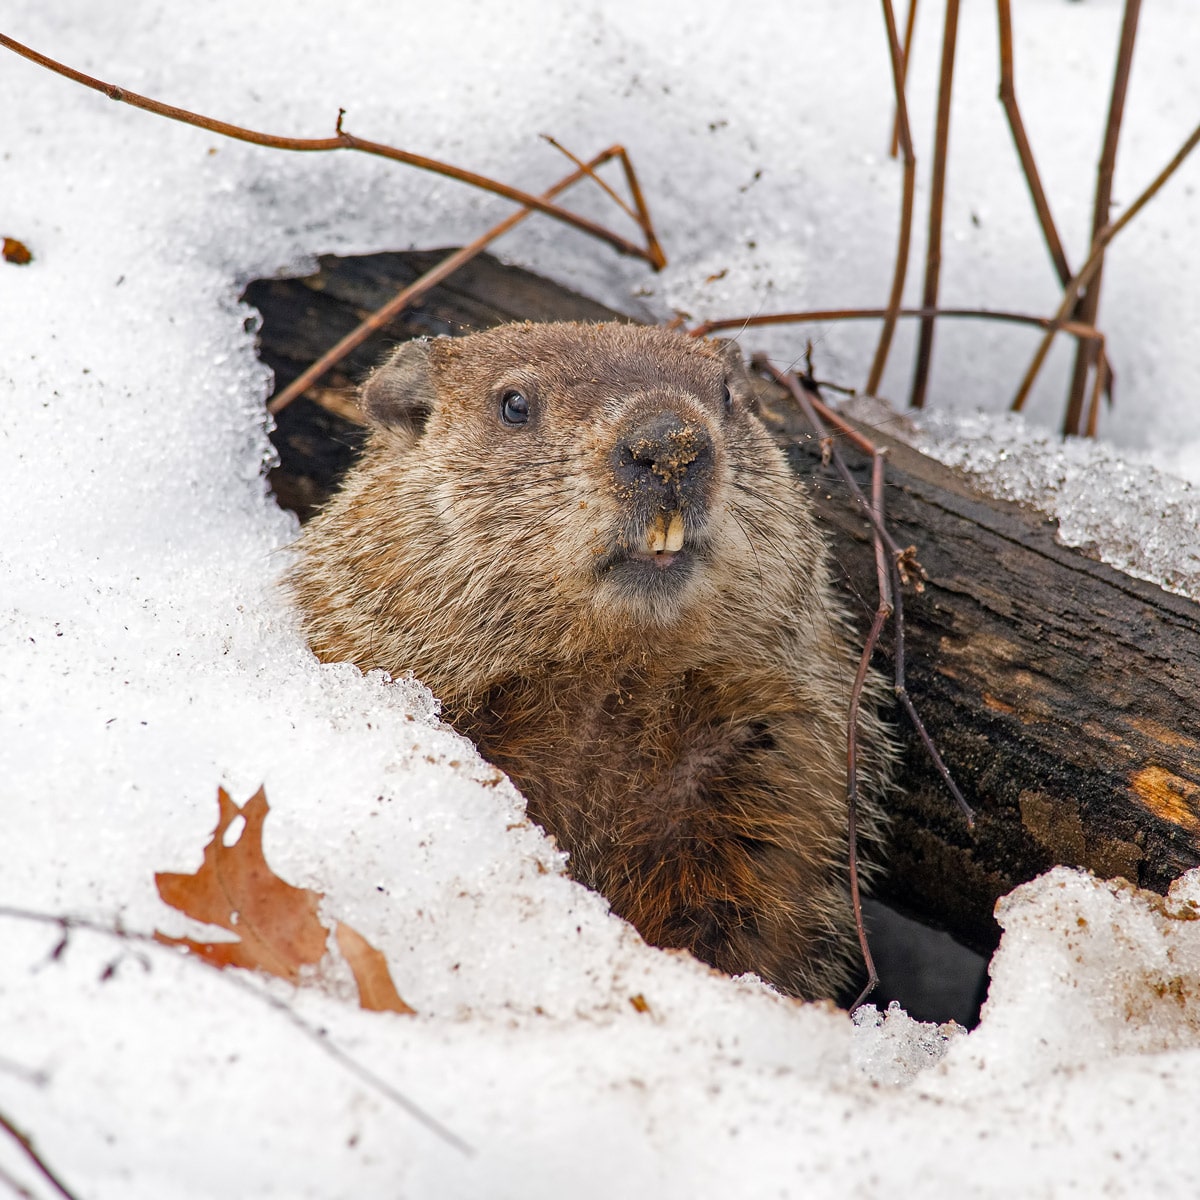 Groundhog Day – February 2, 2022